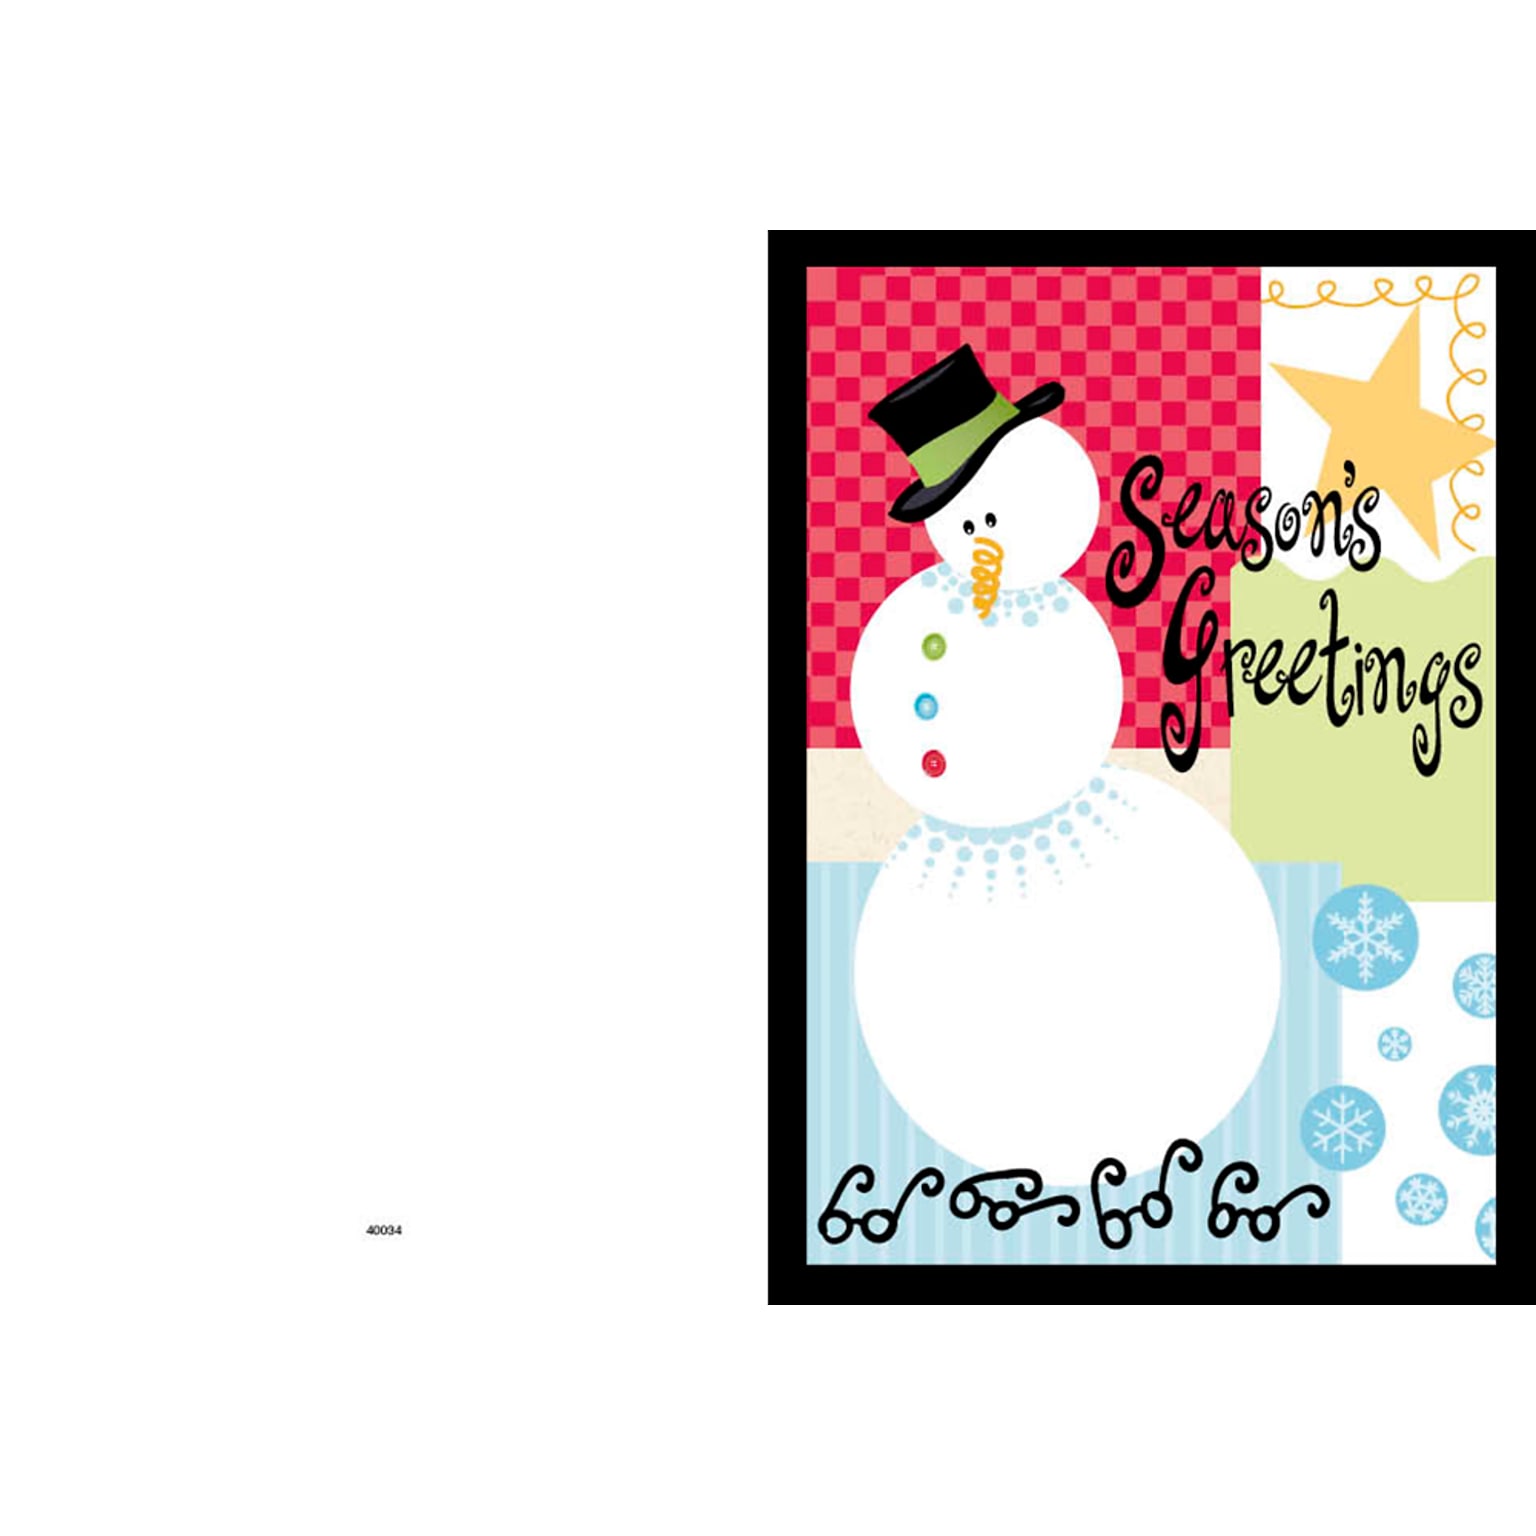 Seasons Greetings - snowman - eye glasses - 7 x 10 scored for folding to 7 x 5, 25 cards w/A7 envelopes per set